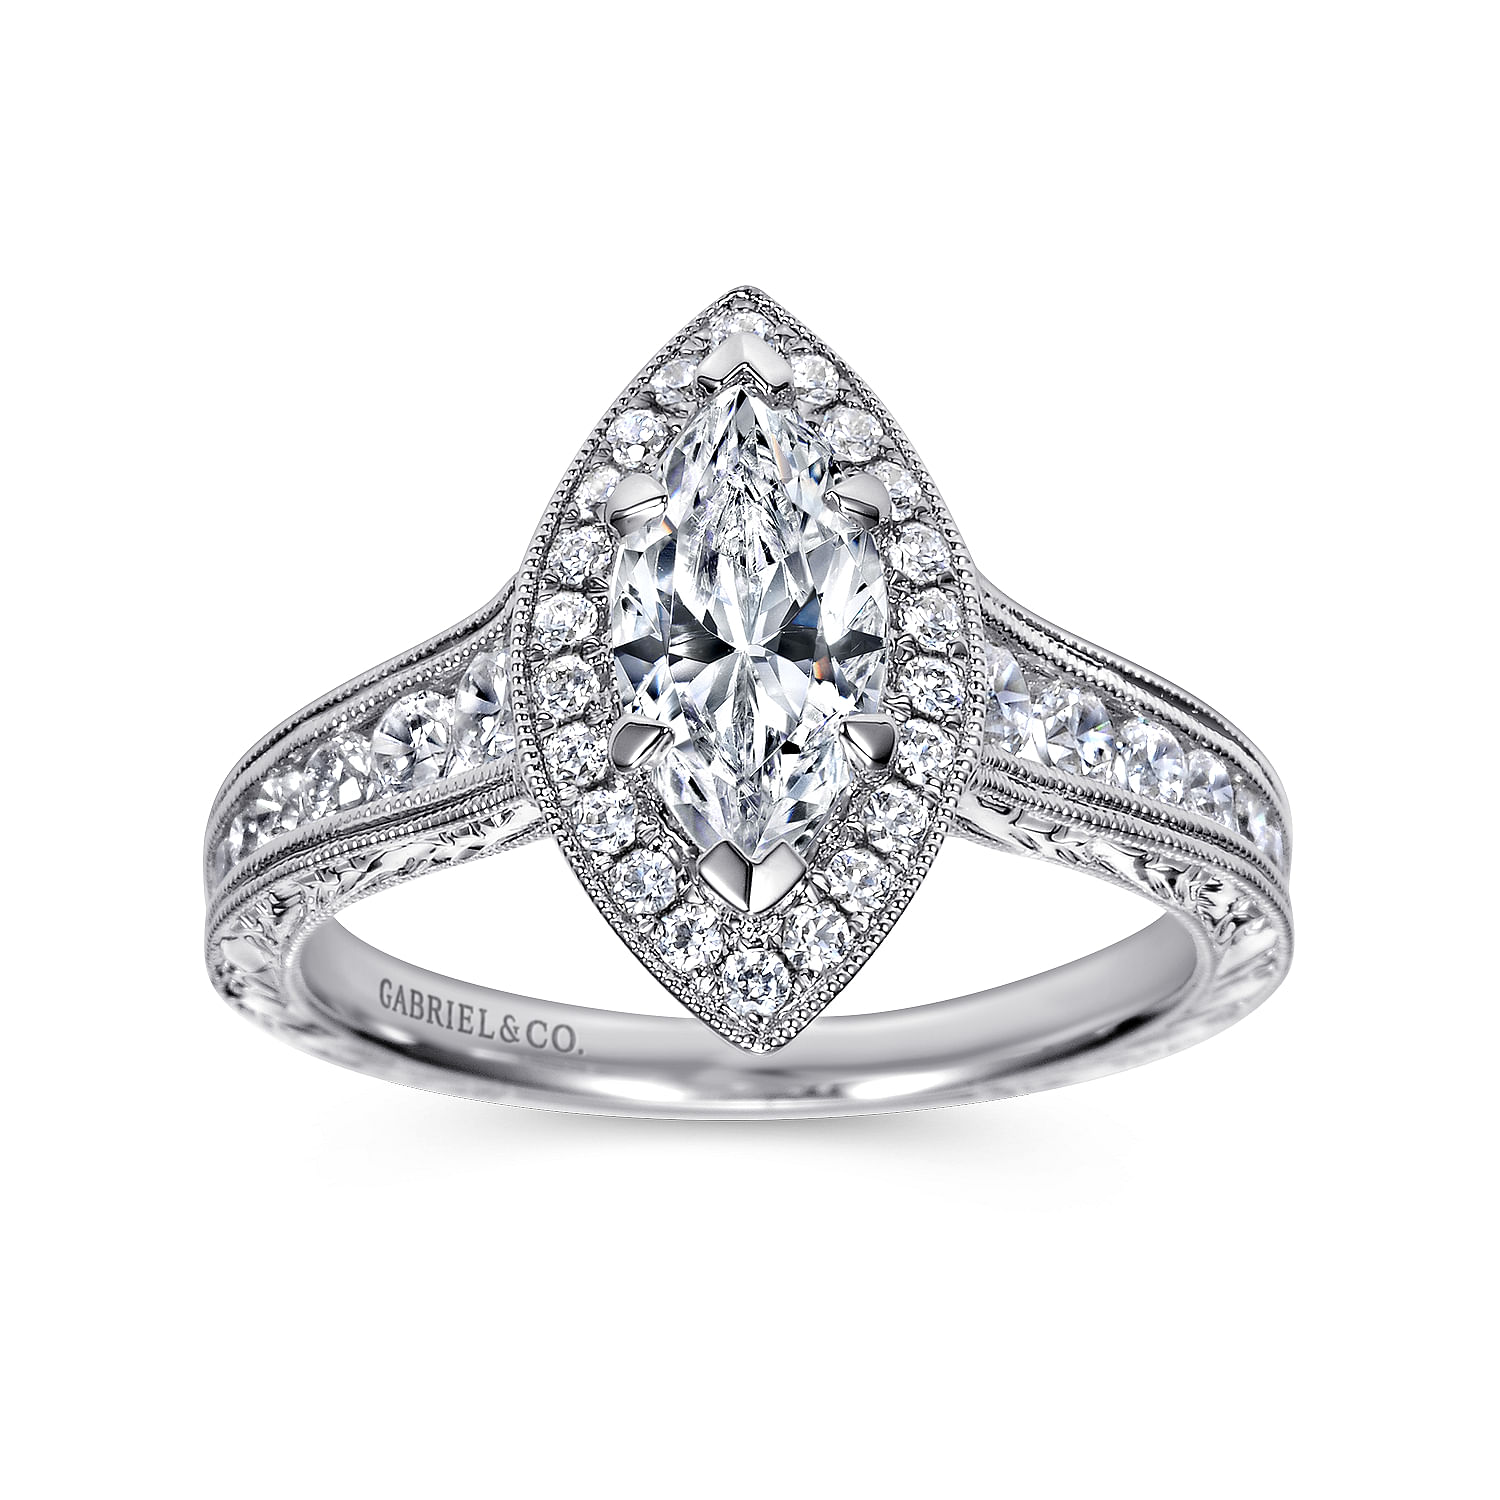 Vintage Inspired 14K White Gold Marquise Halo Diamond Engagement Ring